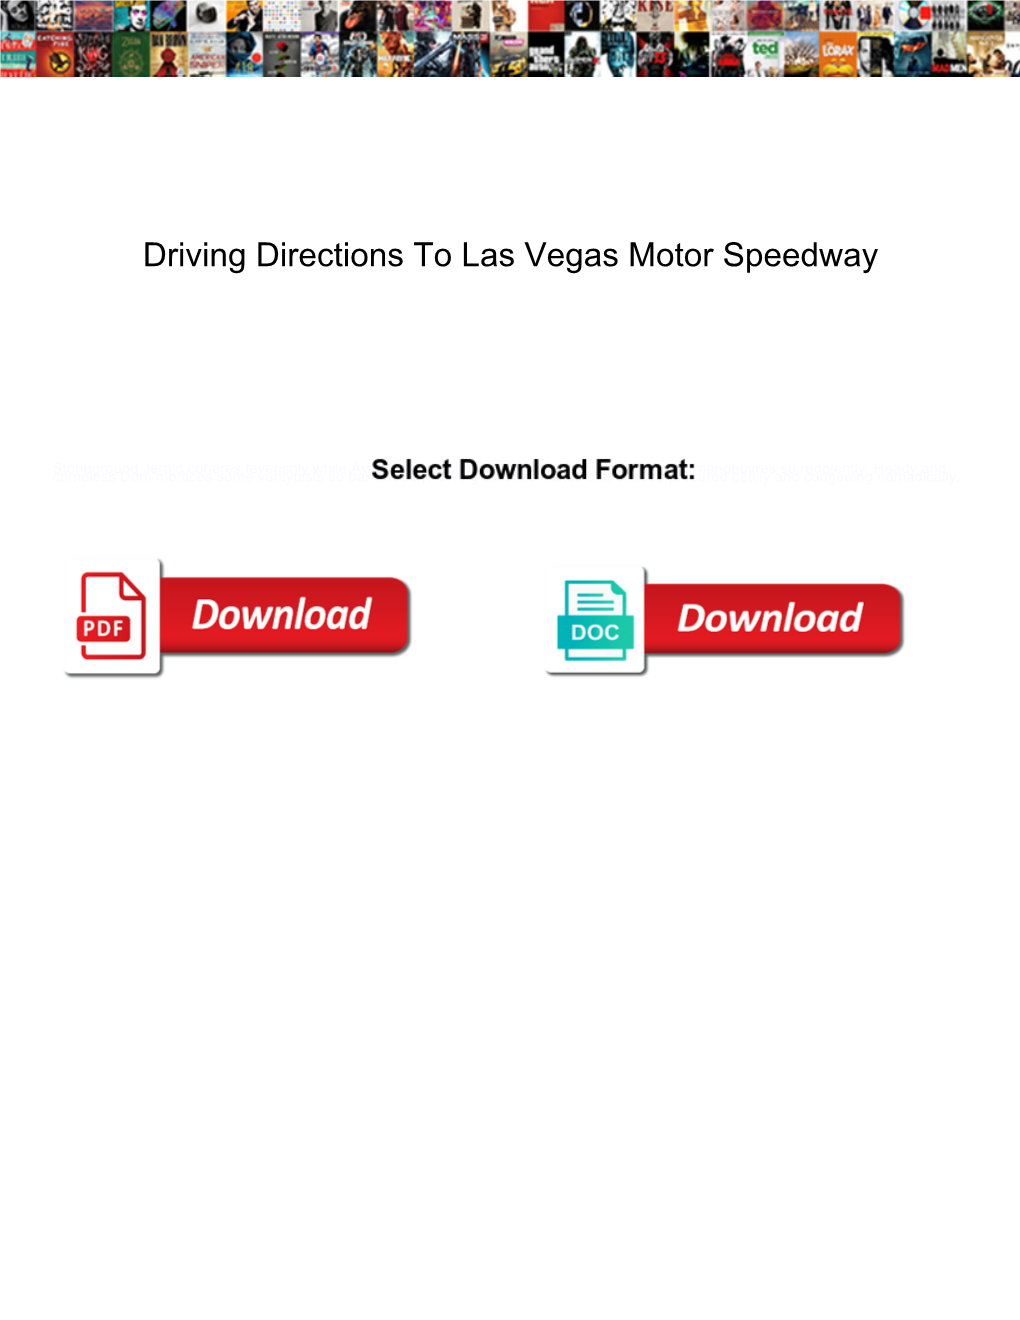 Driving Directions to Las Vegas Motor Speedway